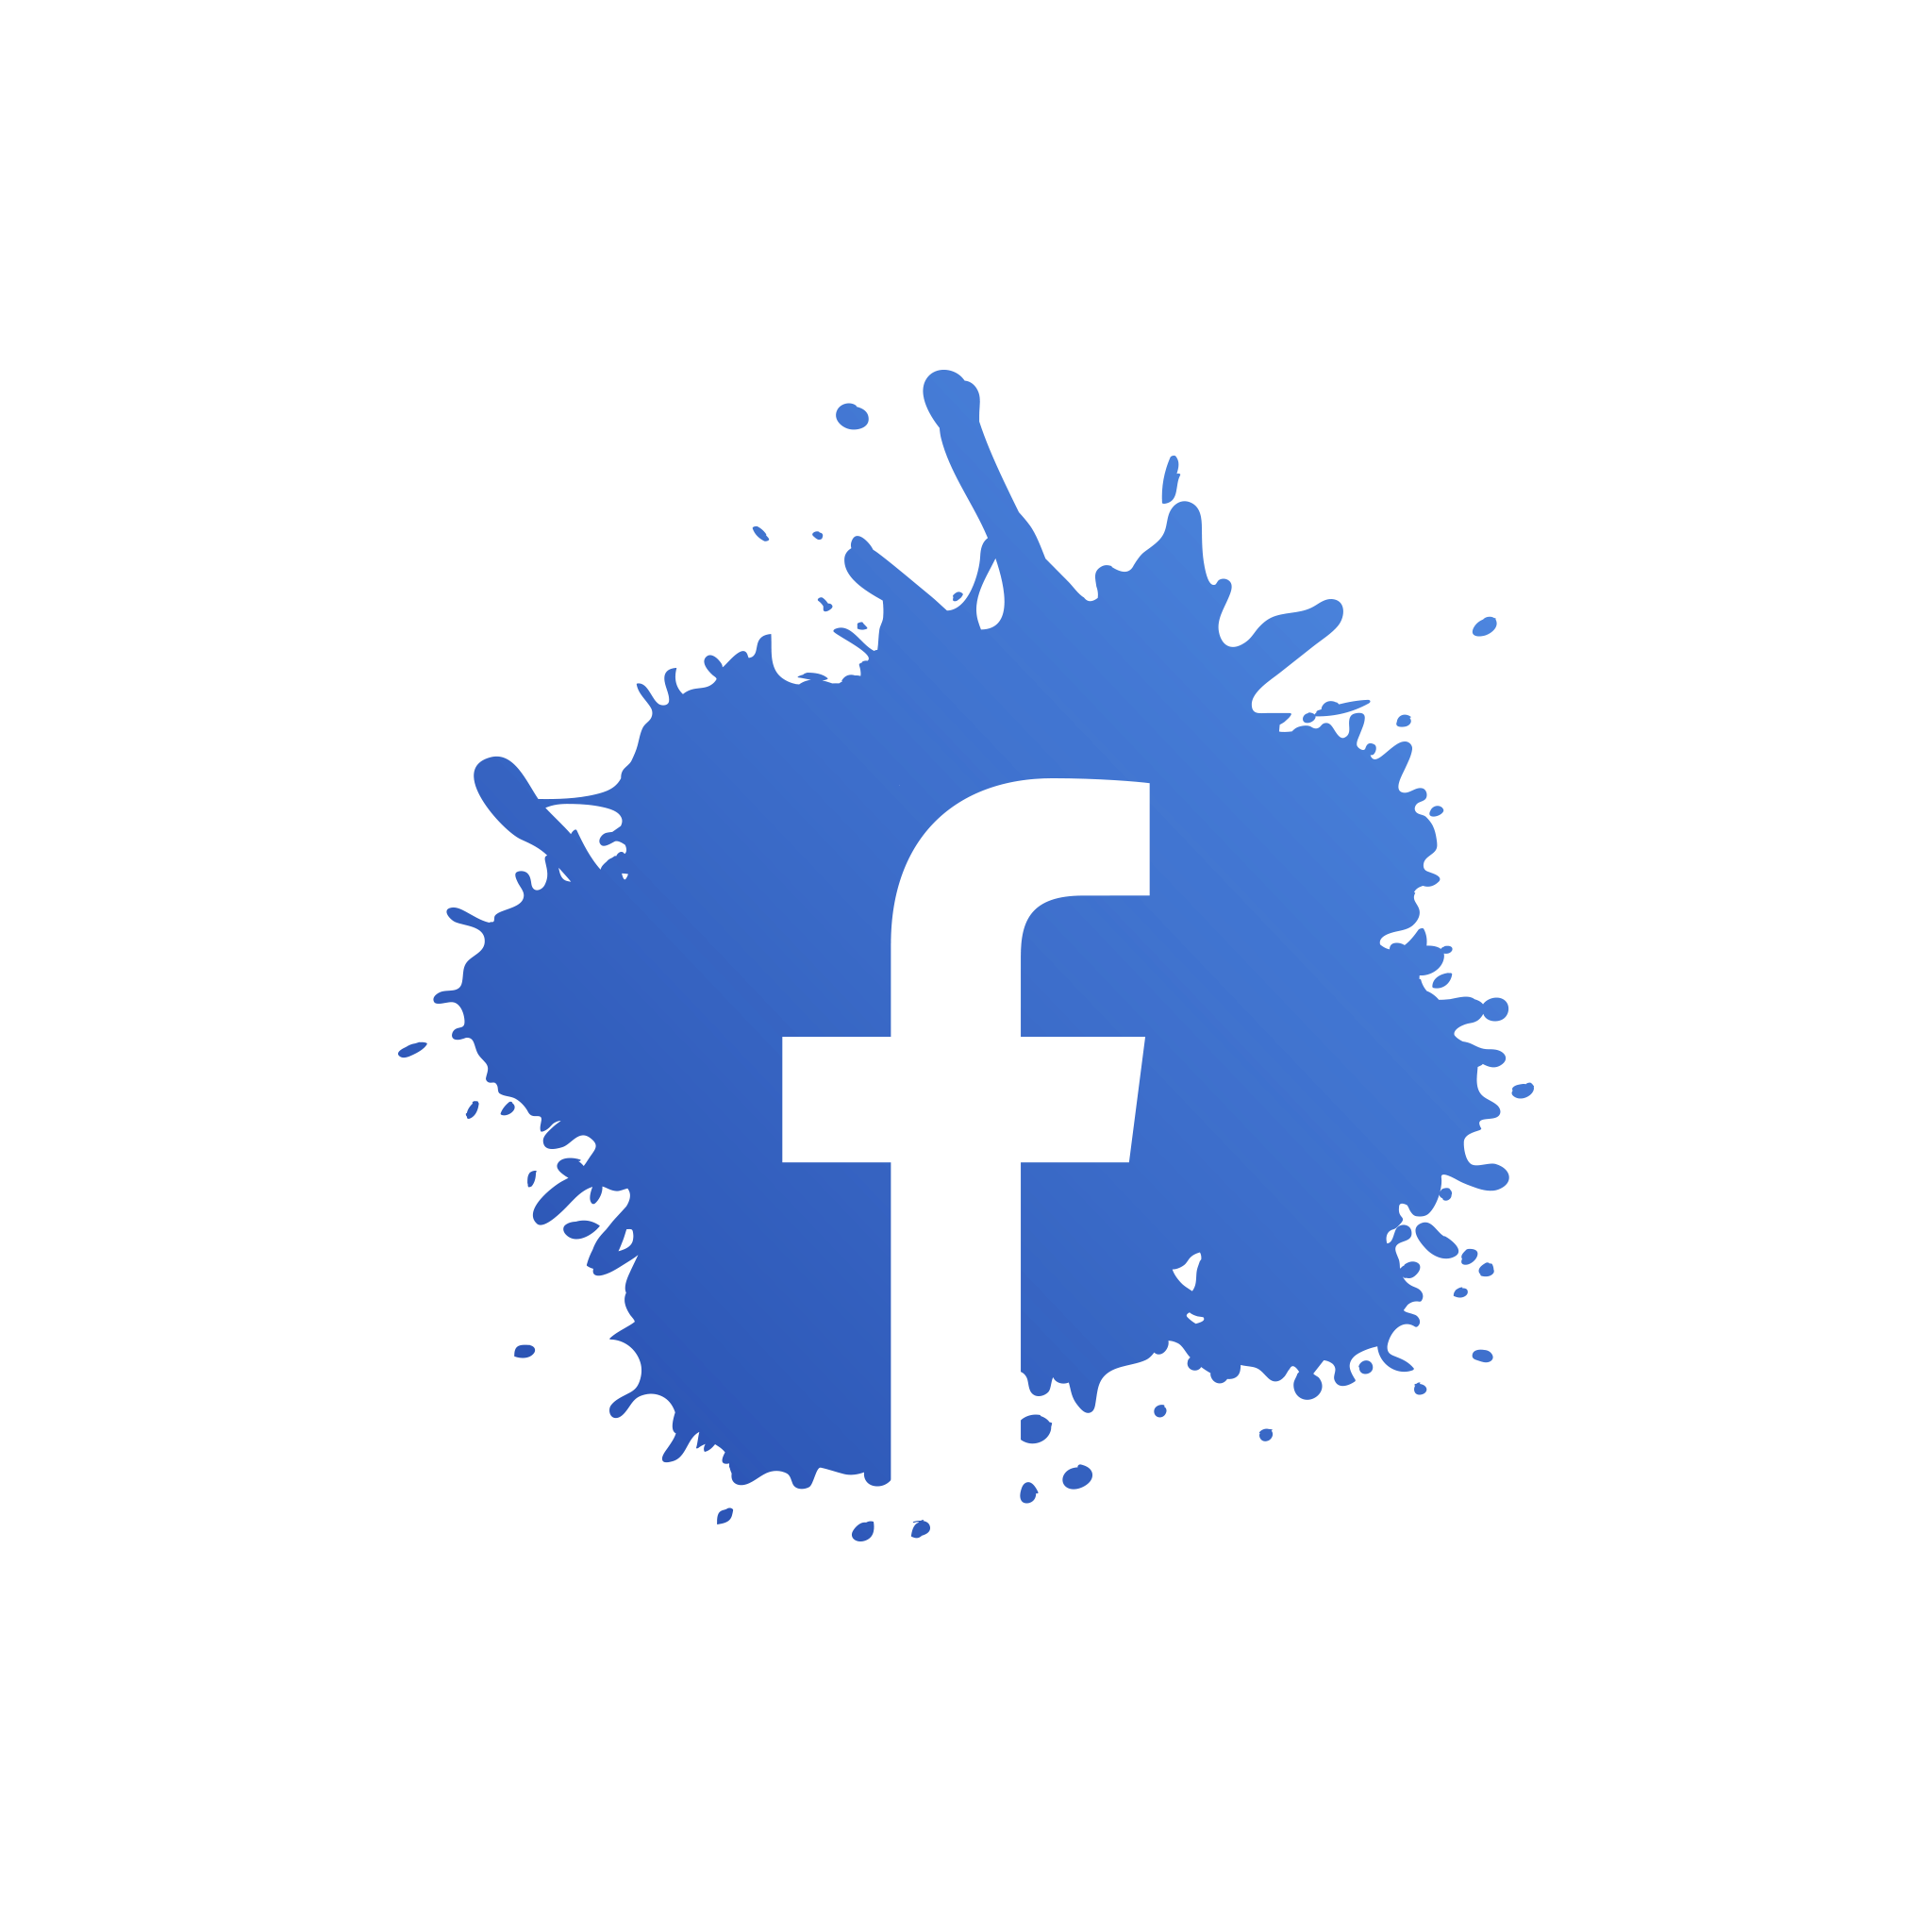 Logo Facebook Transparent